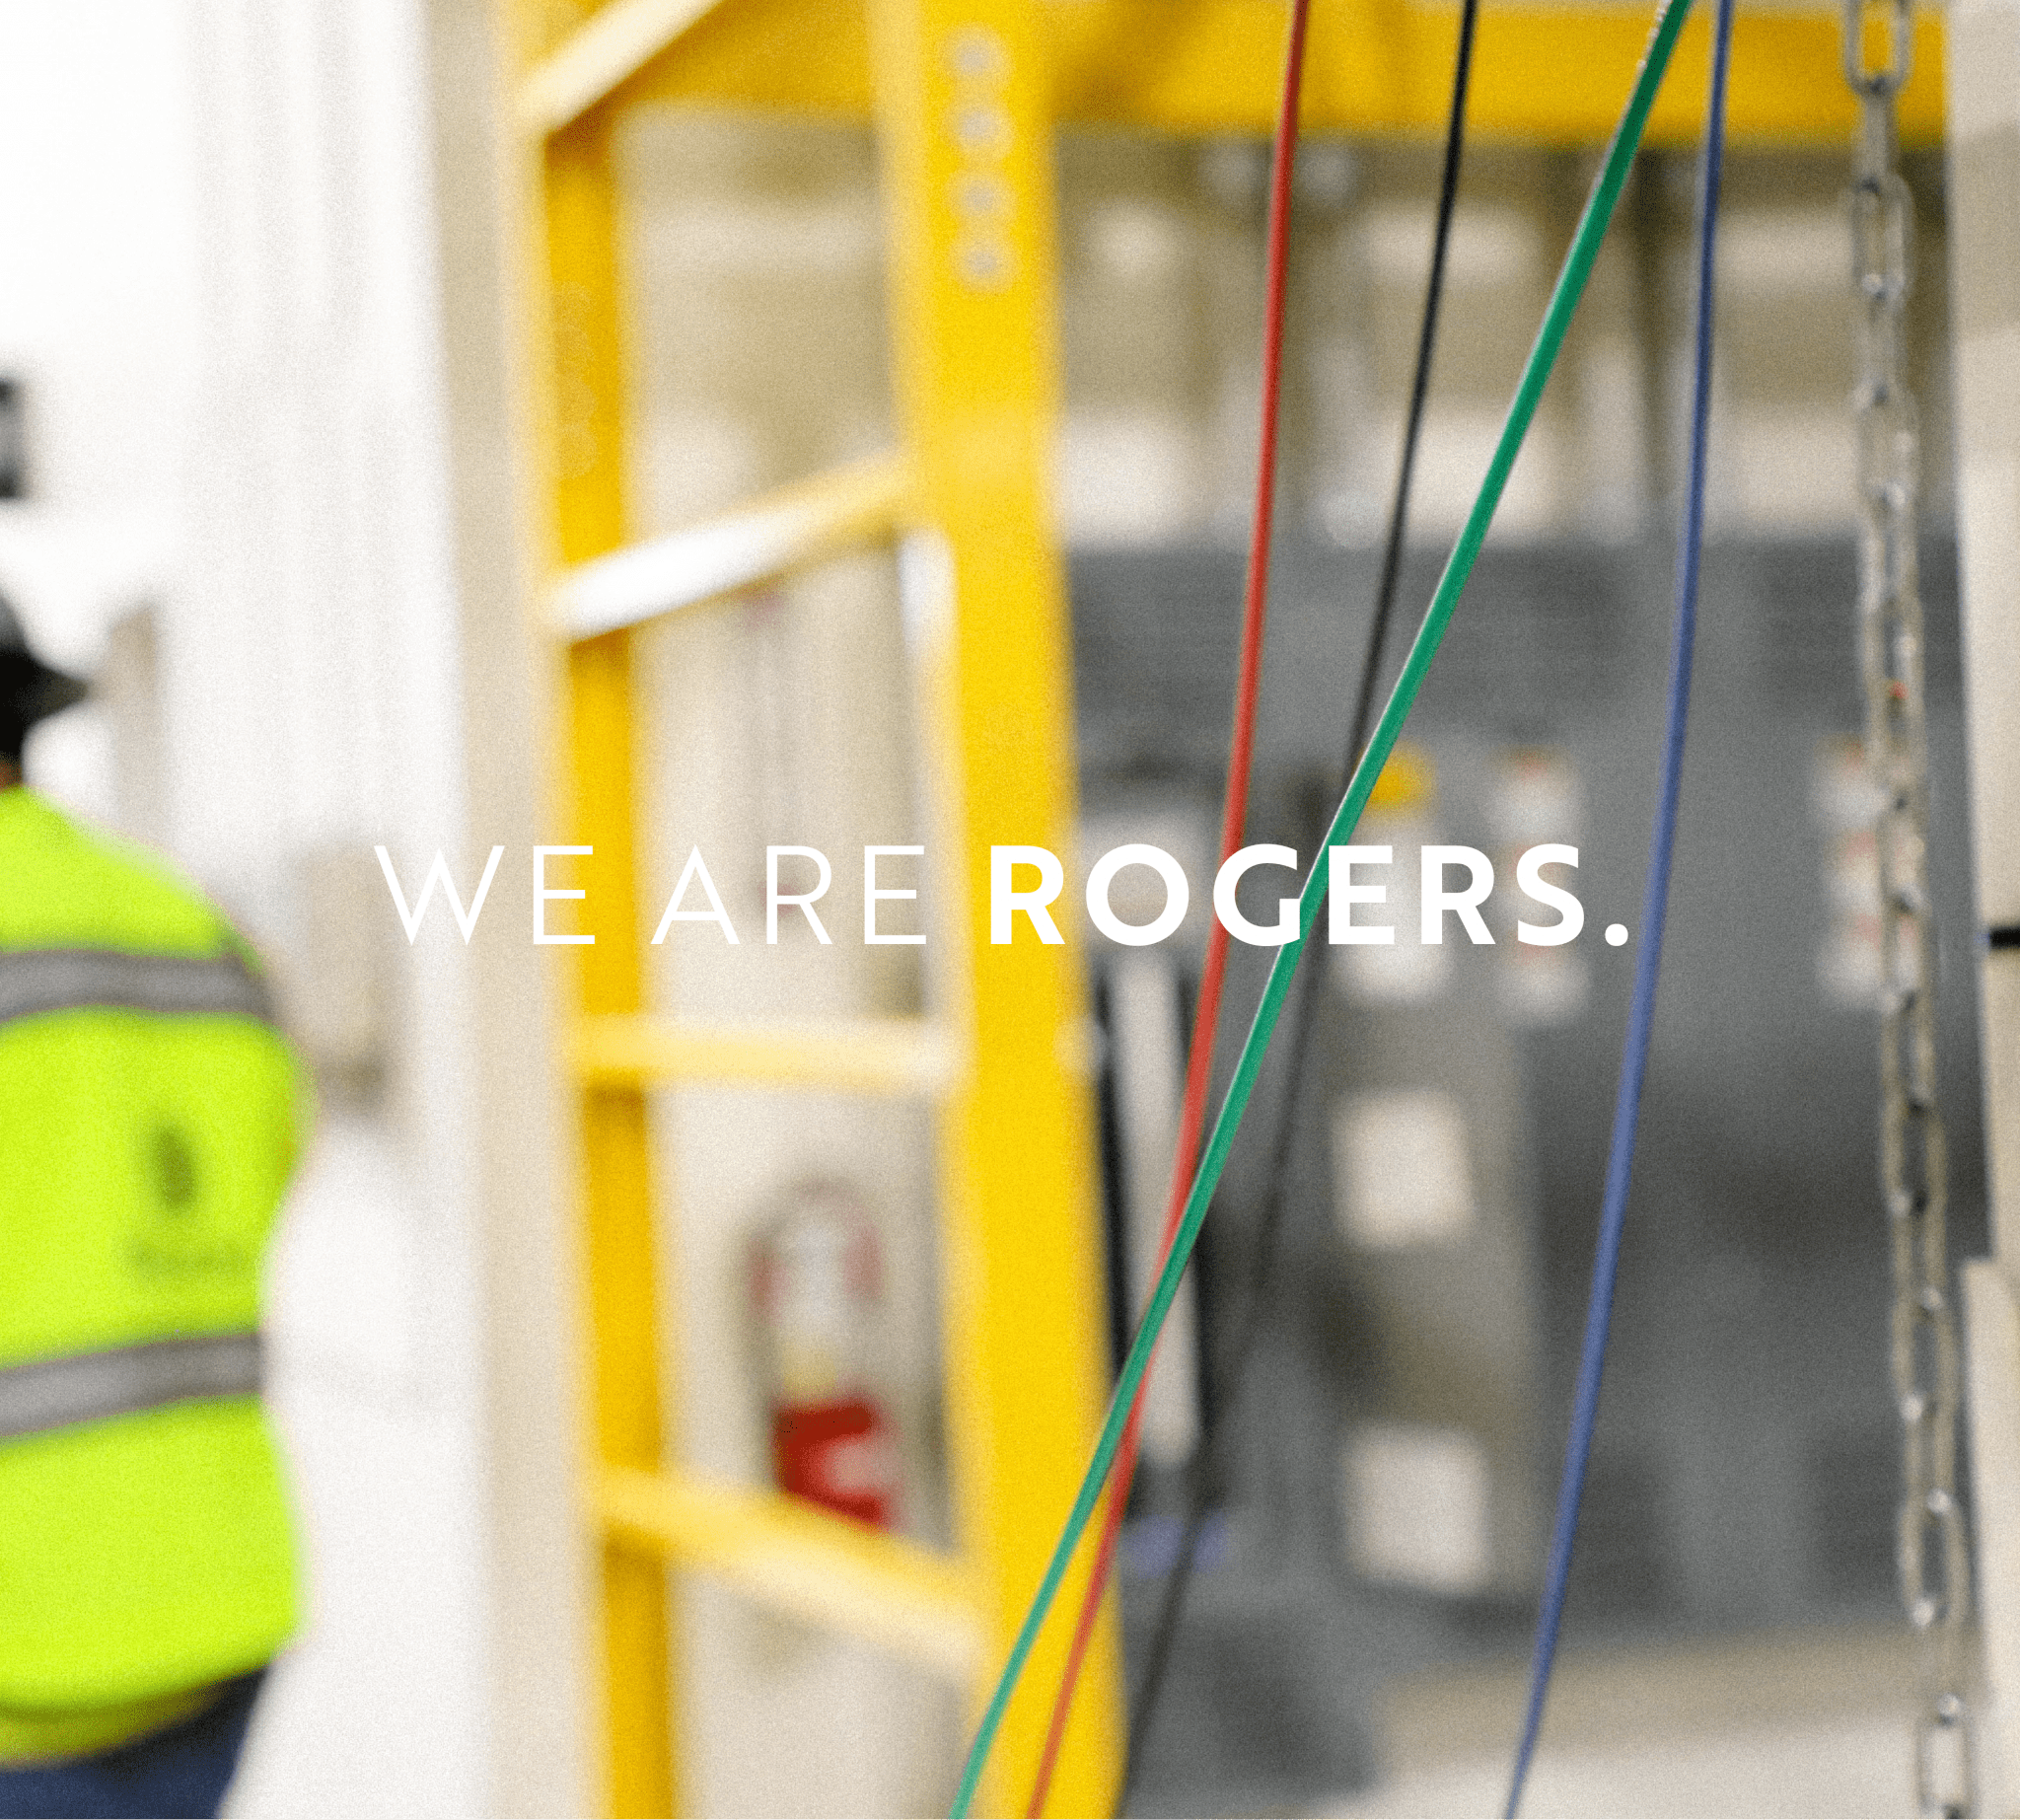 Rogers Core Values